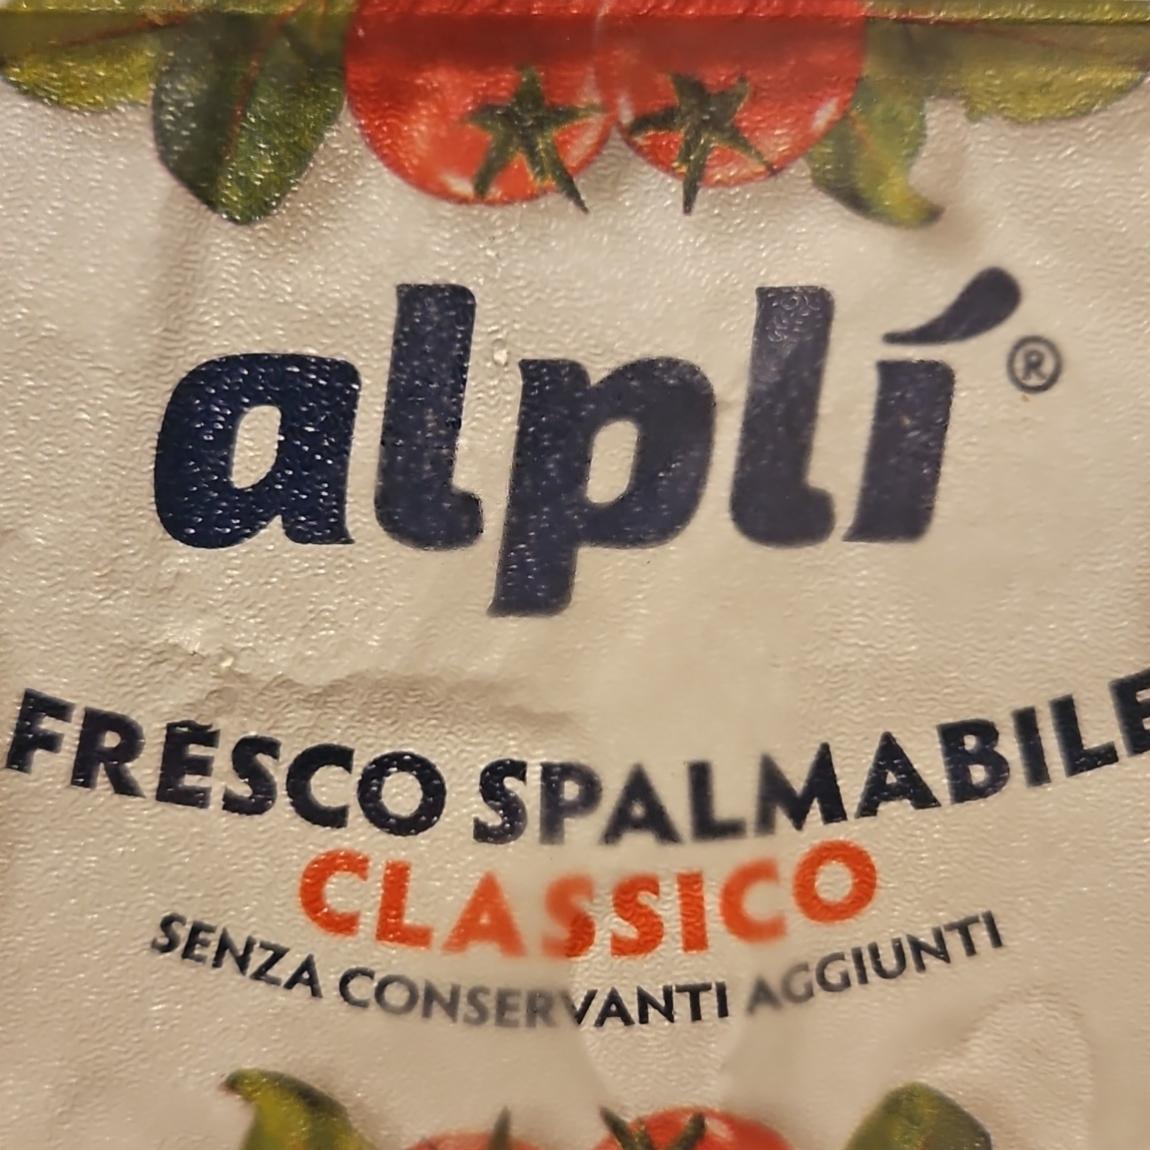 Фото - Творожный сыр fresco spalmabile CLASSICO Alpli